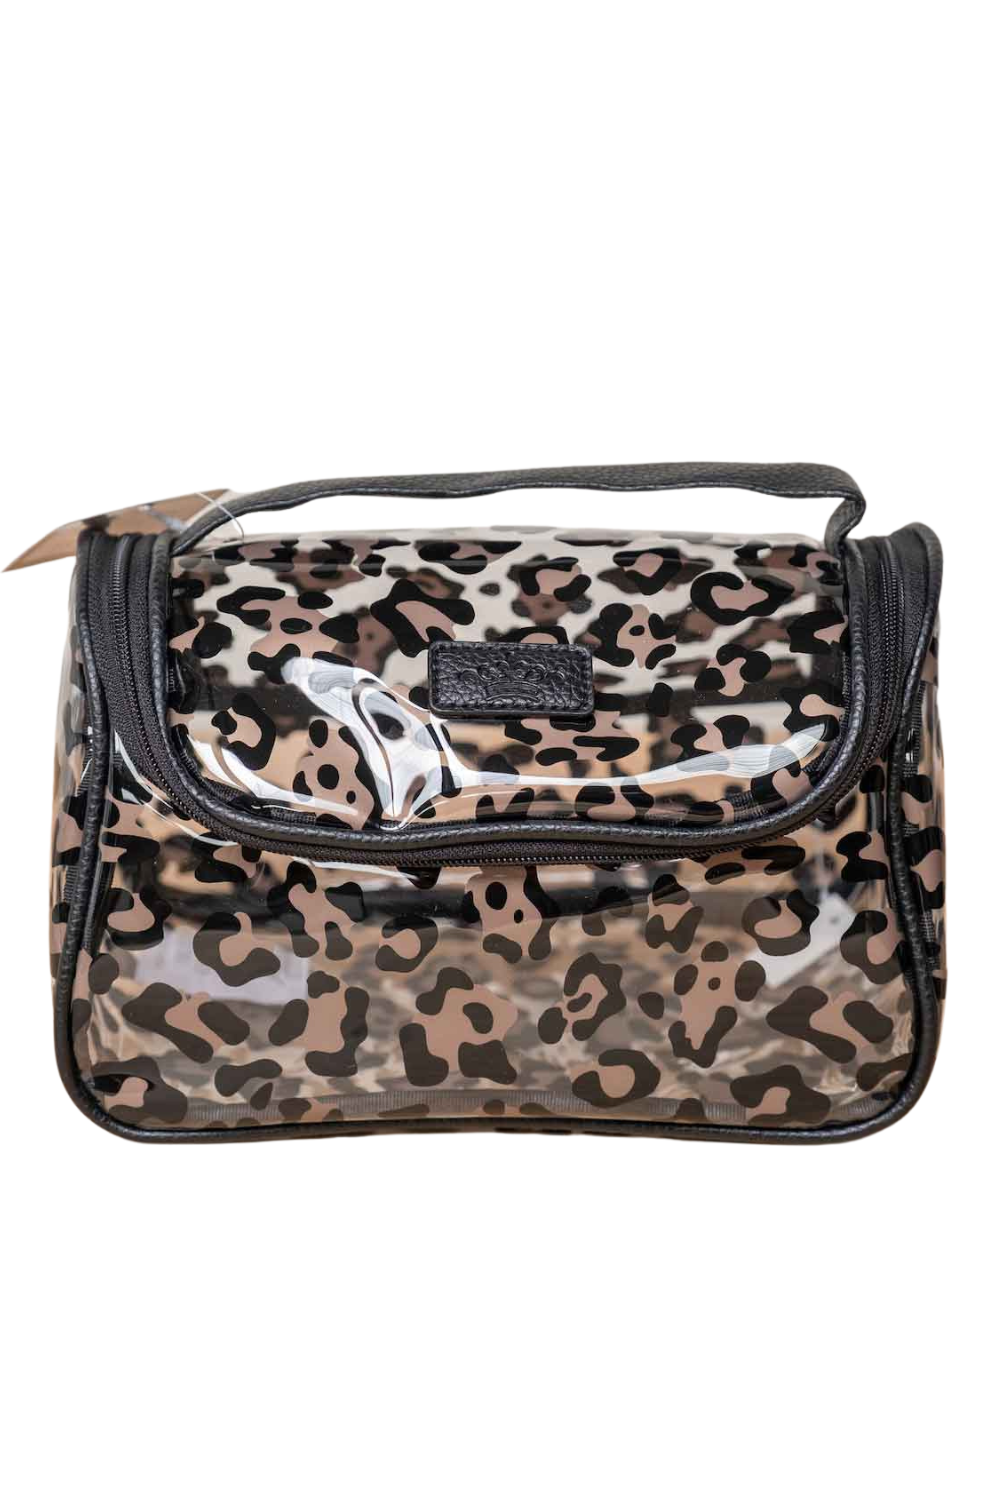 Leopard Travel Cosmetic Bag Black/Tan